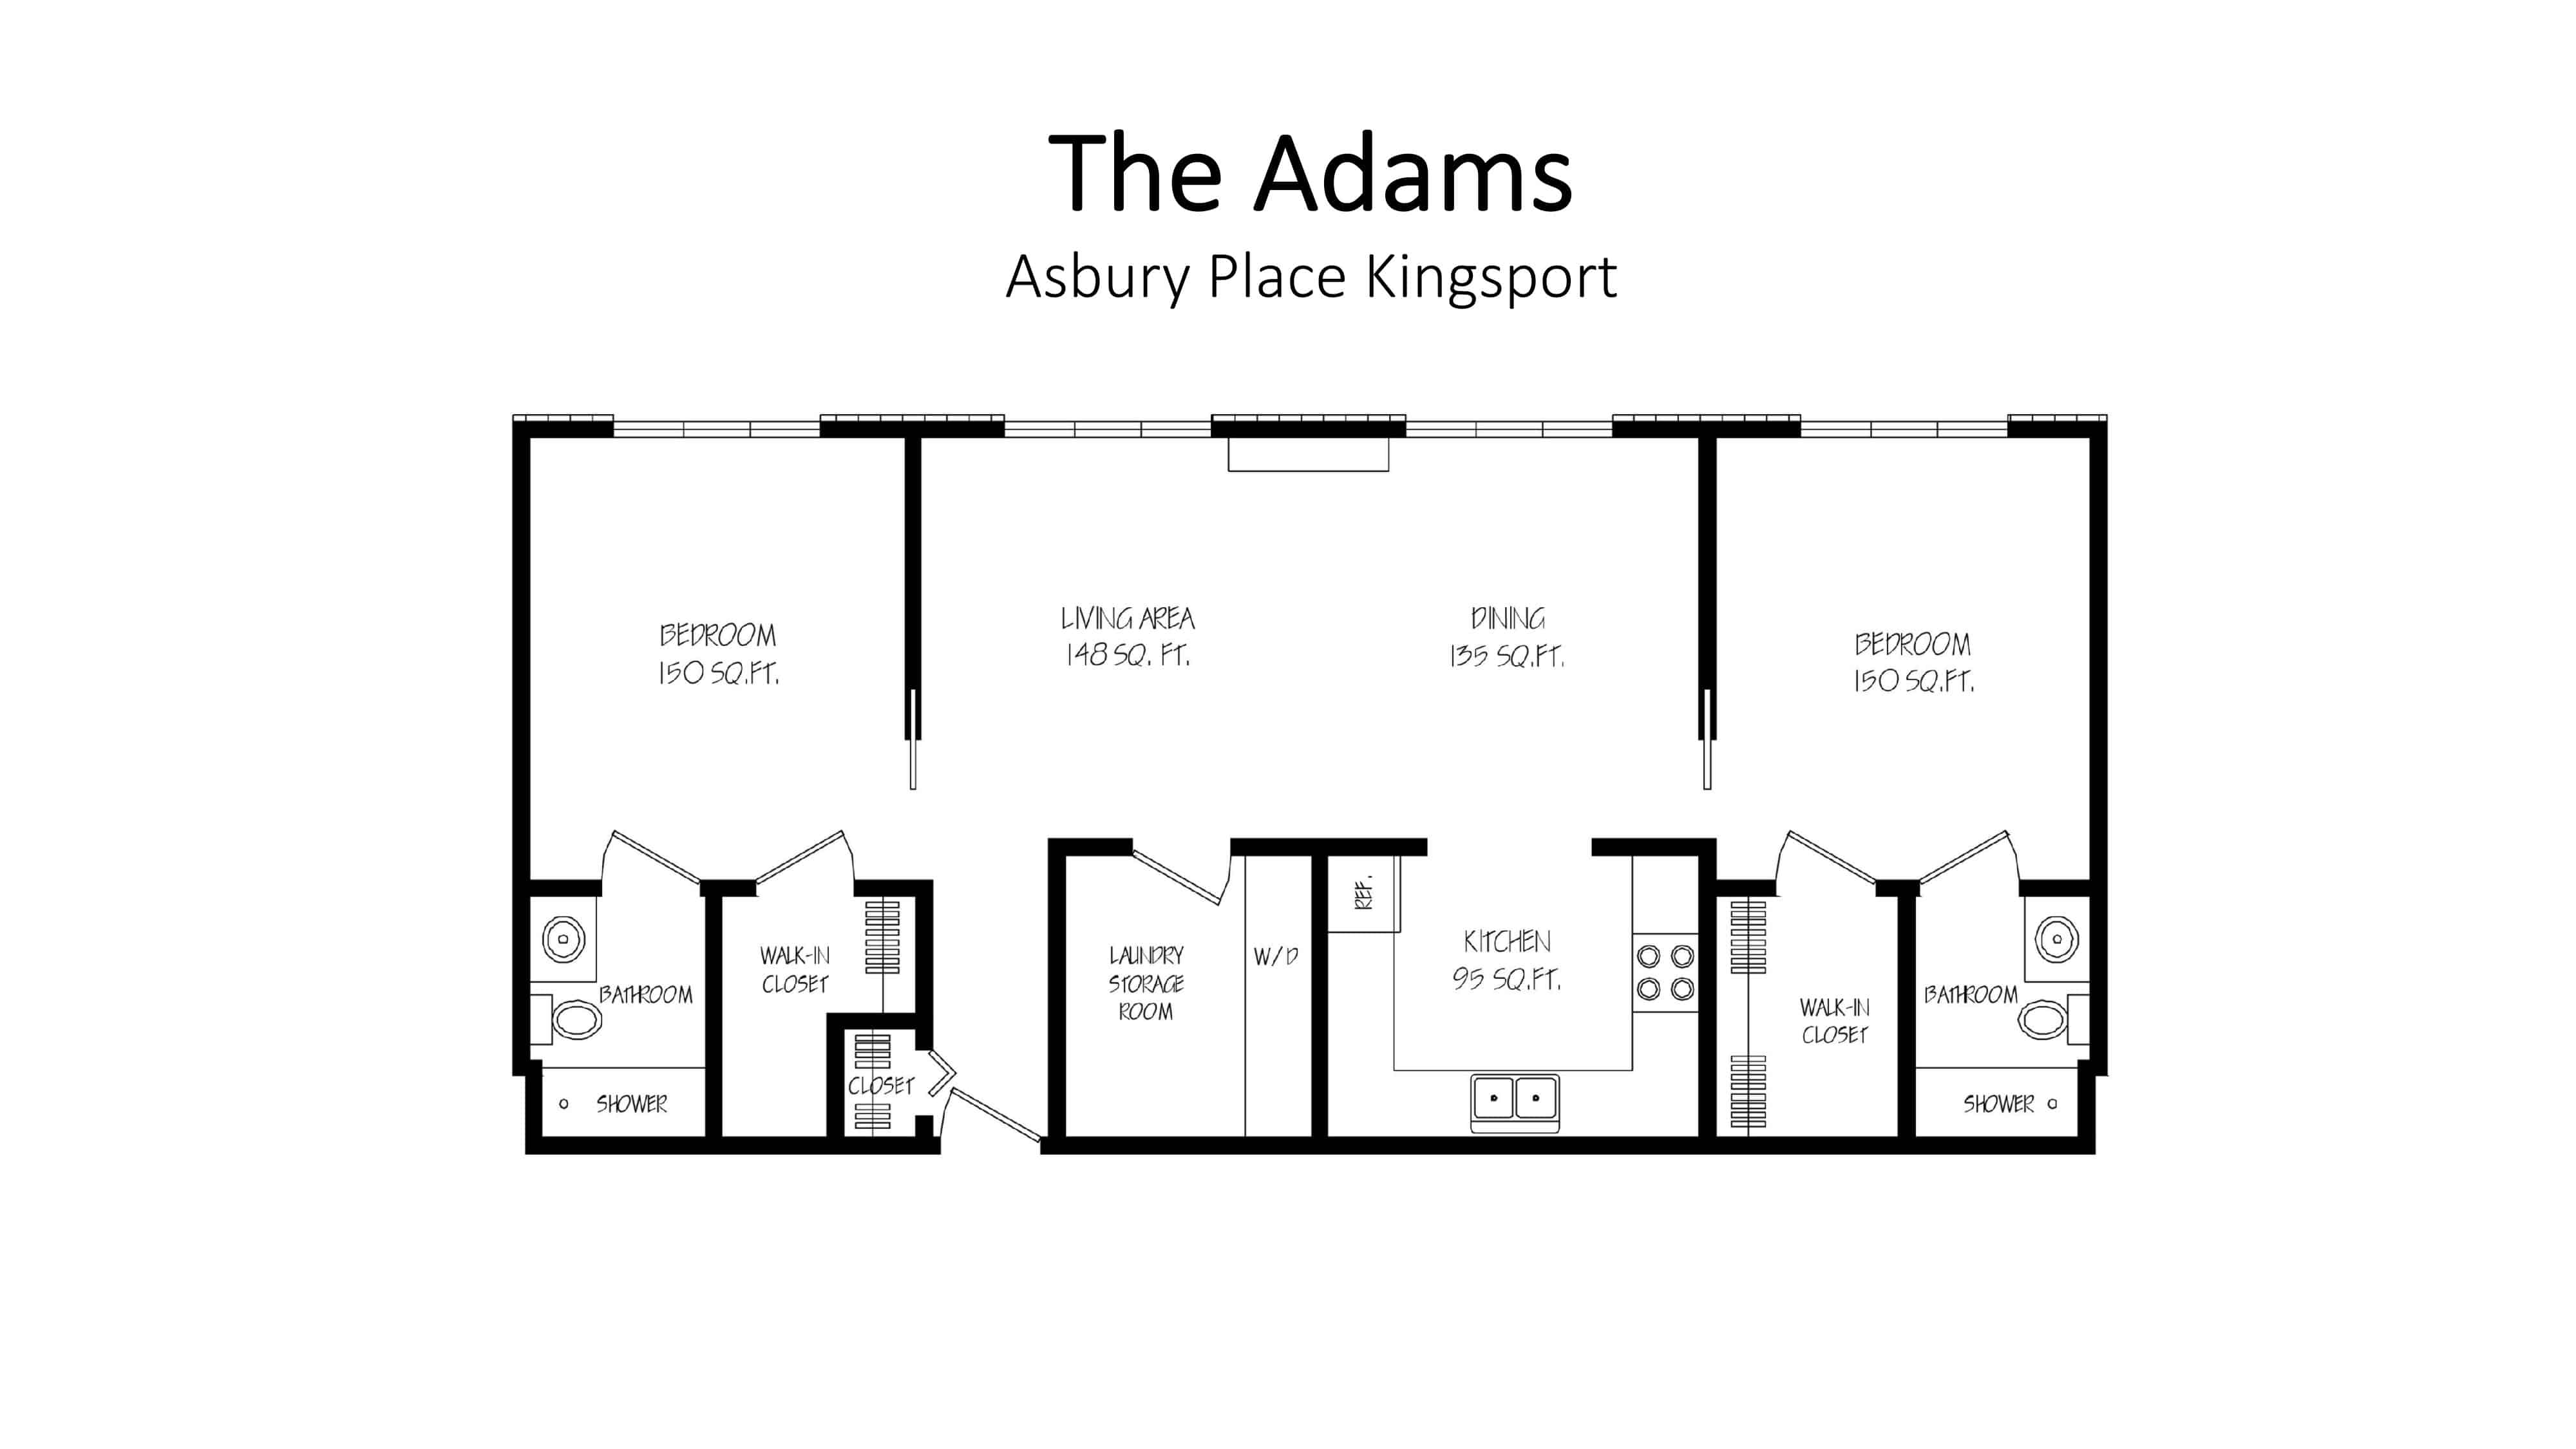 Asbury Place Kingsport The Adams Floorplan